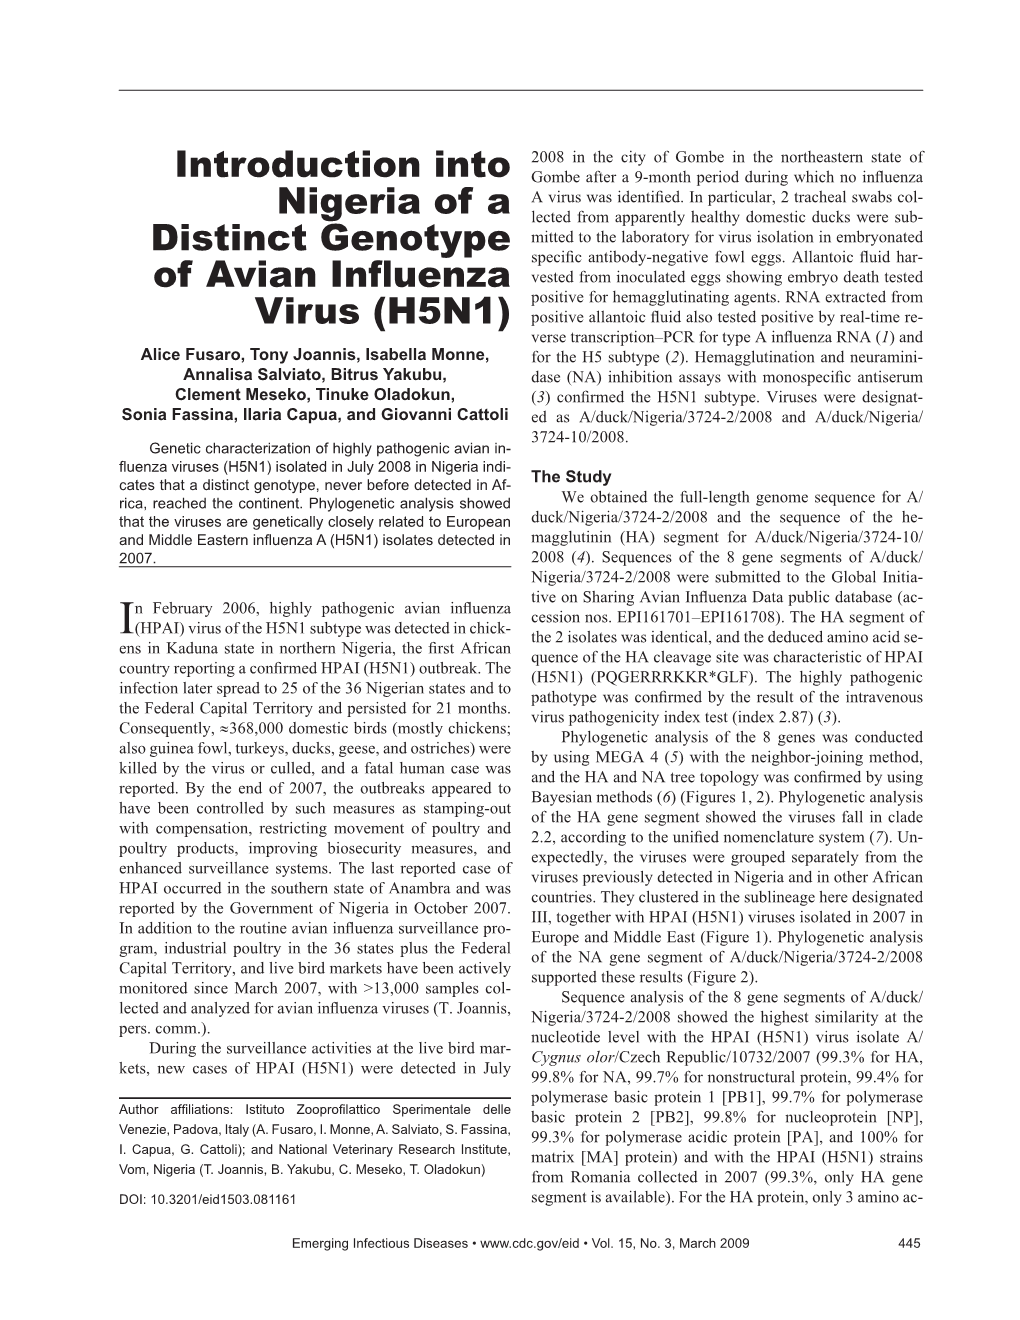 Introduction Into Nigeria of a Distinct Genotype of Avian Influenza Virus